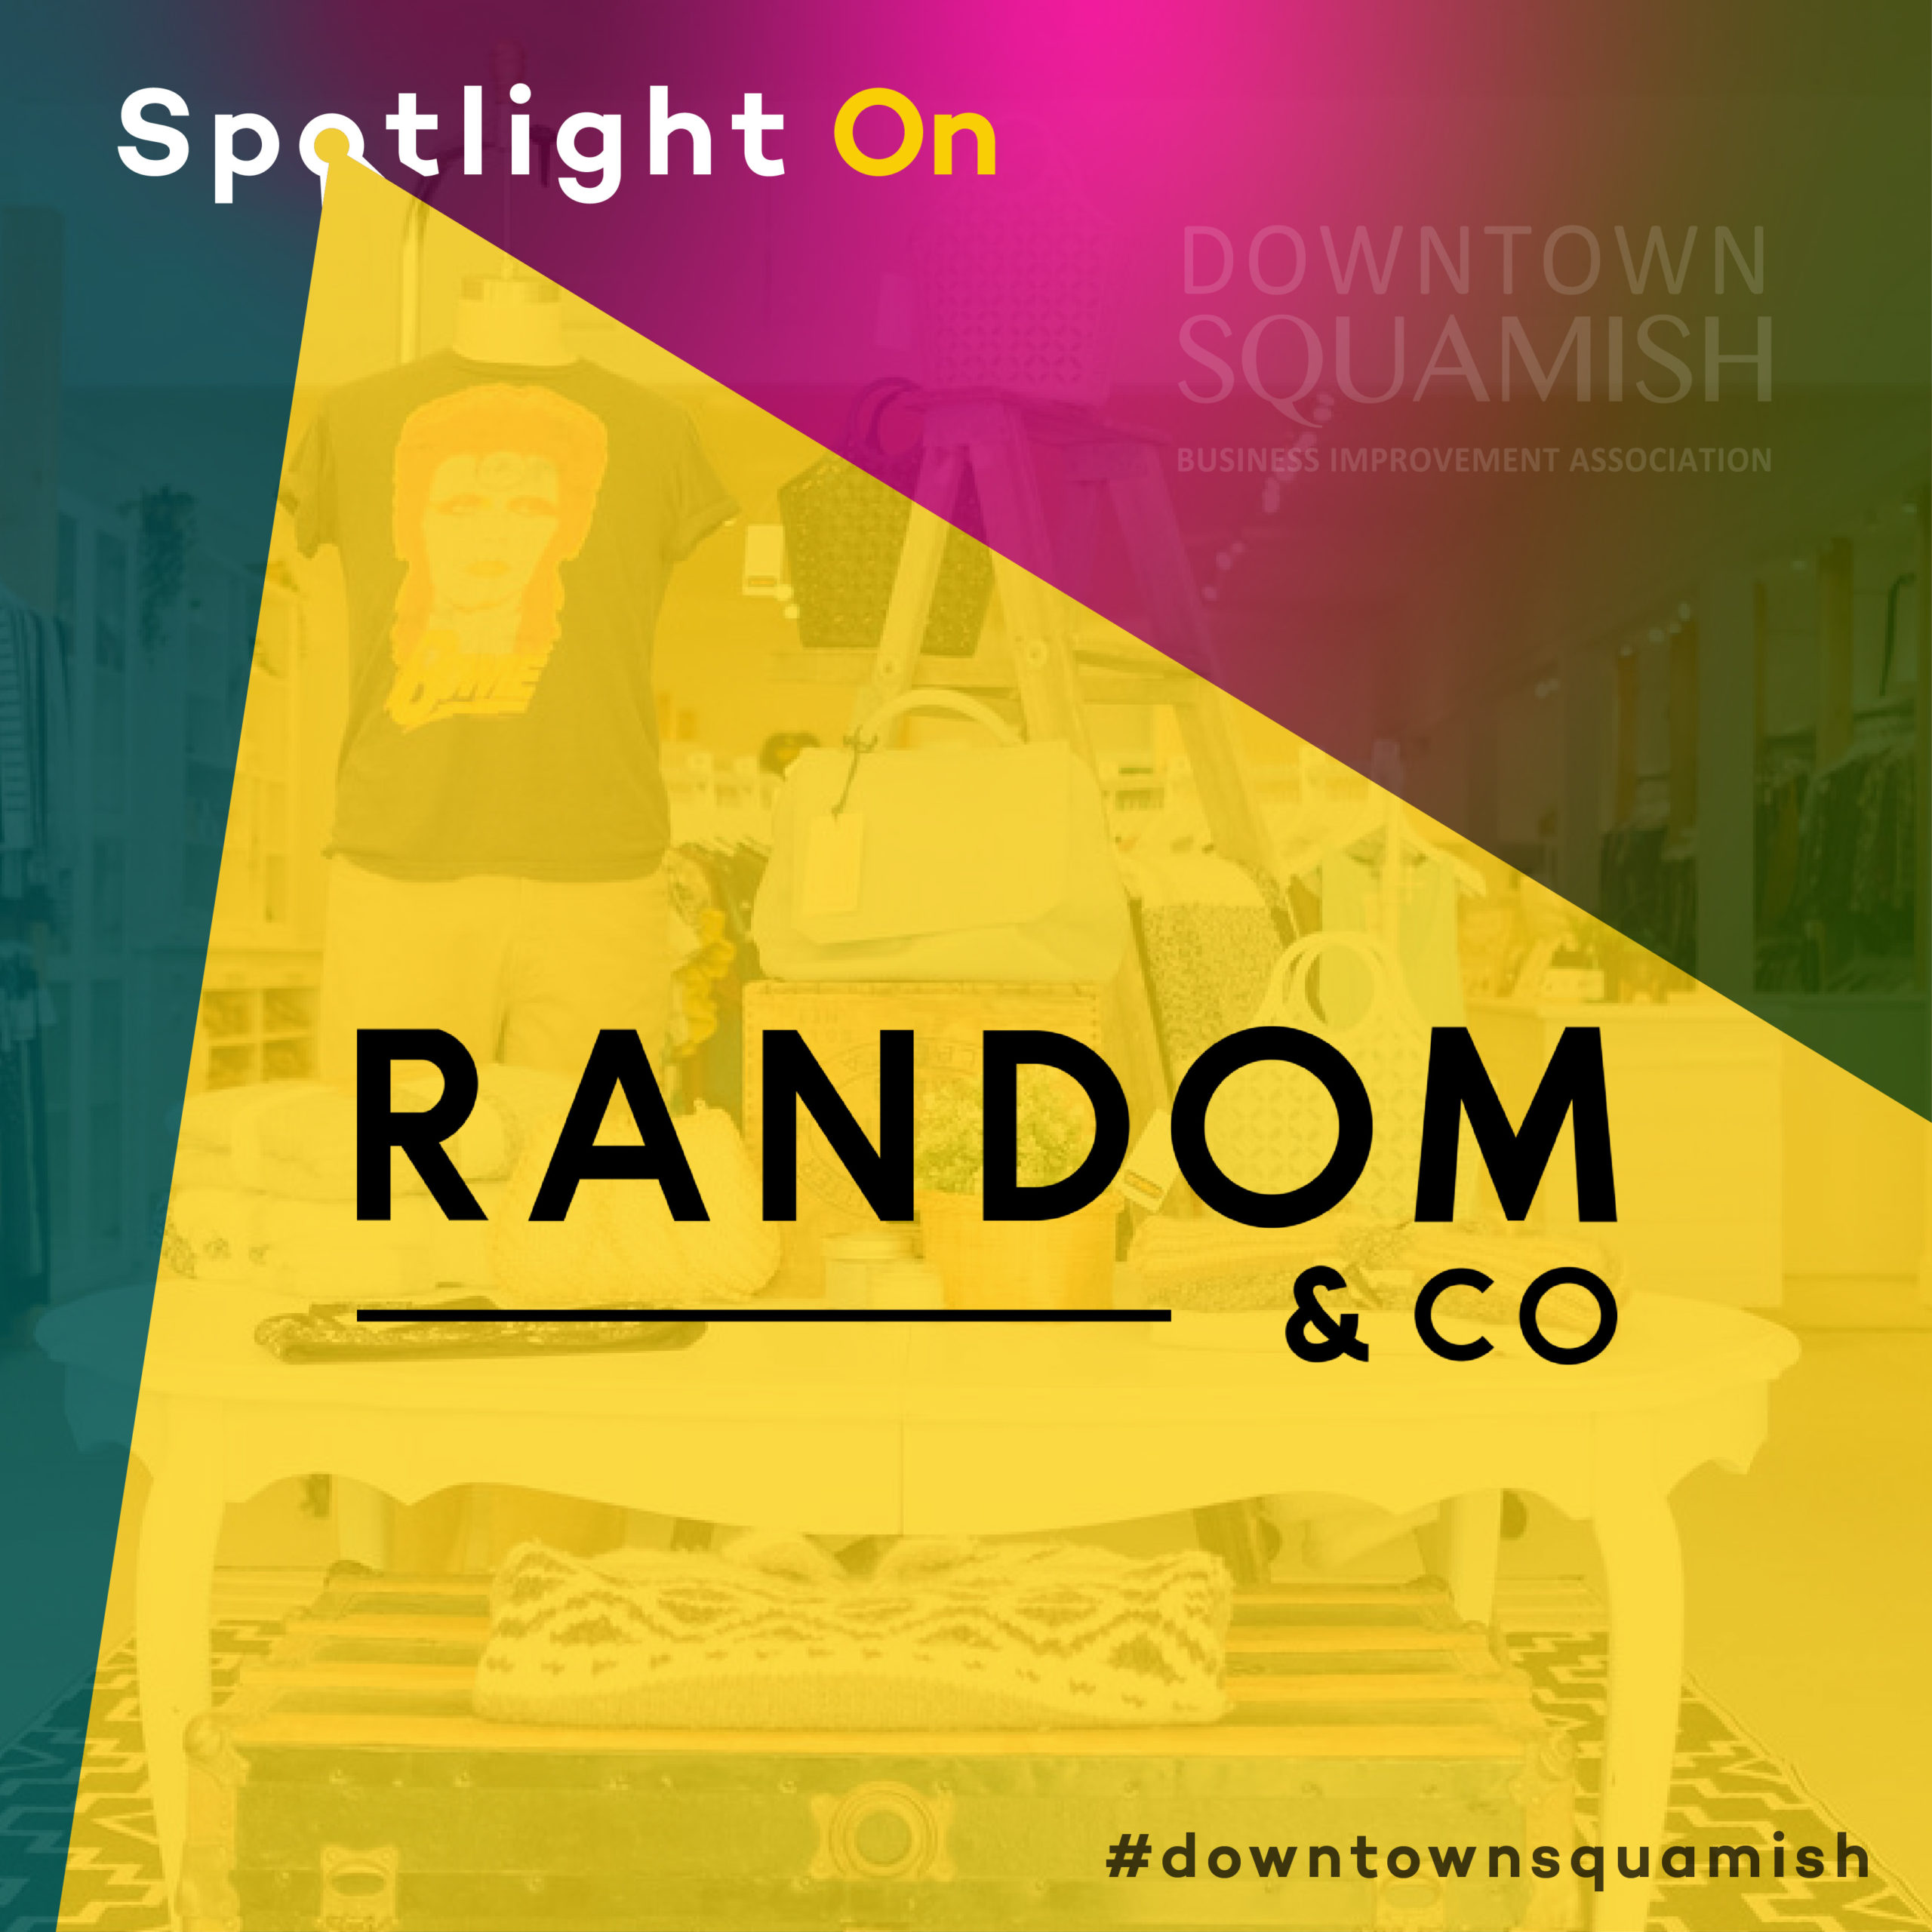 https://www.downtownsquamish.com/wp-content/uploads/2020/09/Spotlight_On_RANDOM-26-scaled.jpg